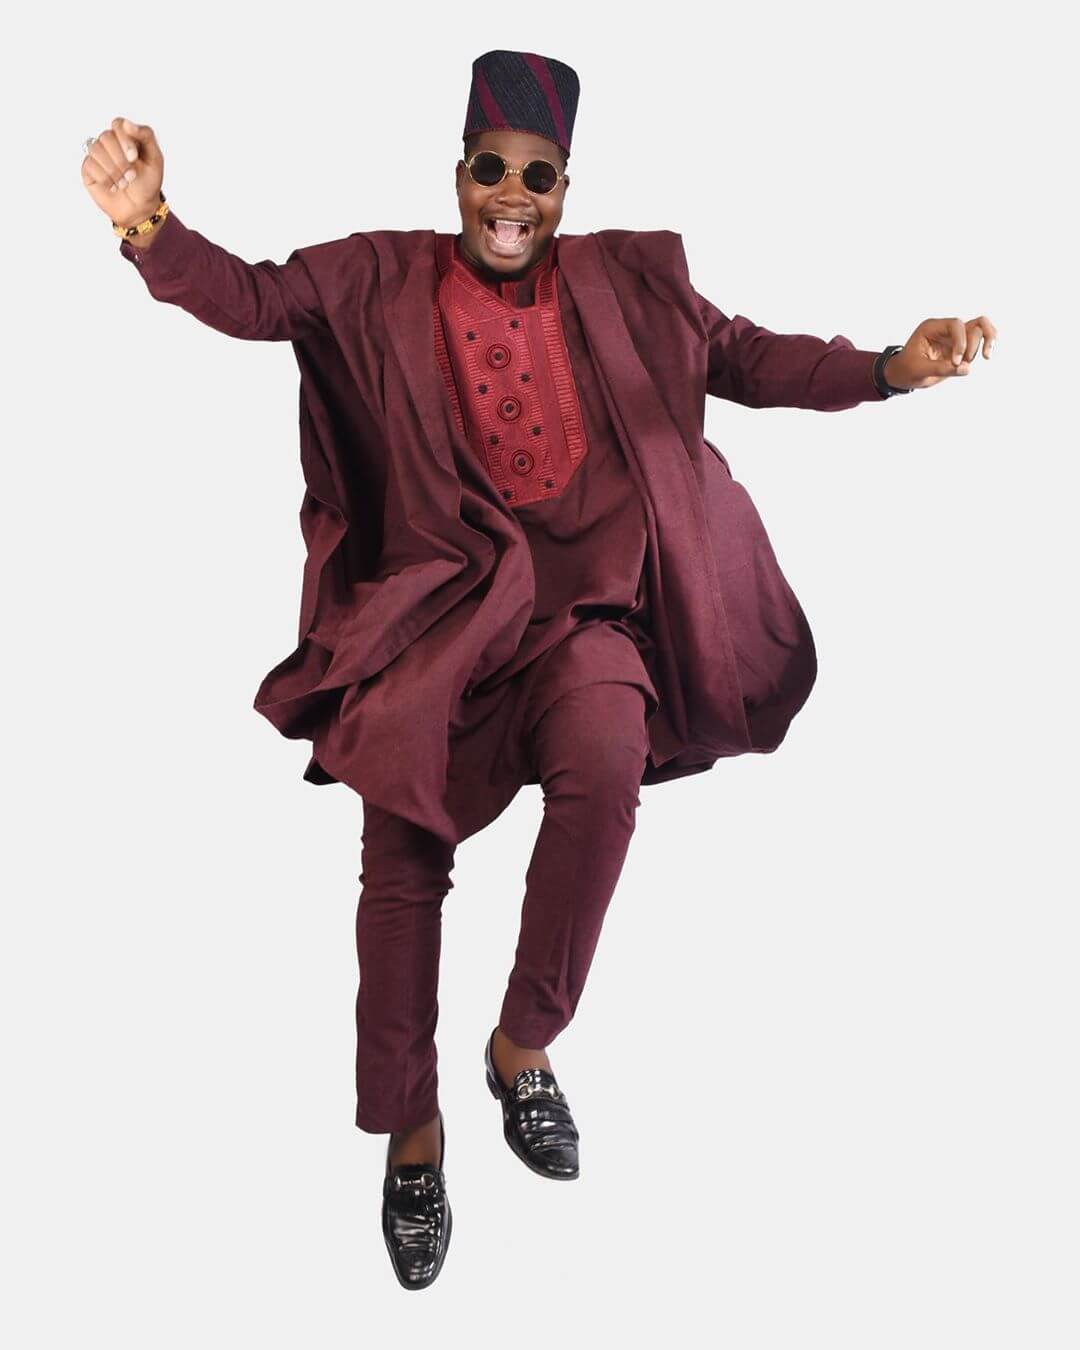 popular Nigerian skit skit maker and comedian, Debo Adedayo, known as Mr Macaroni.